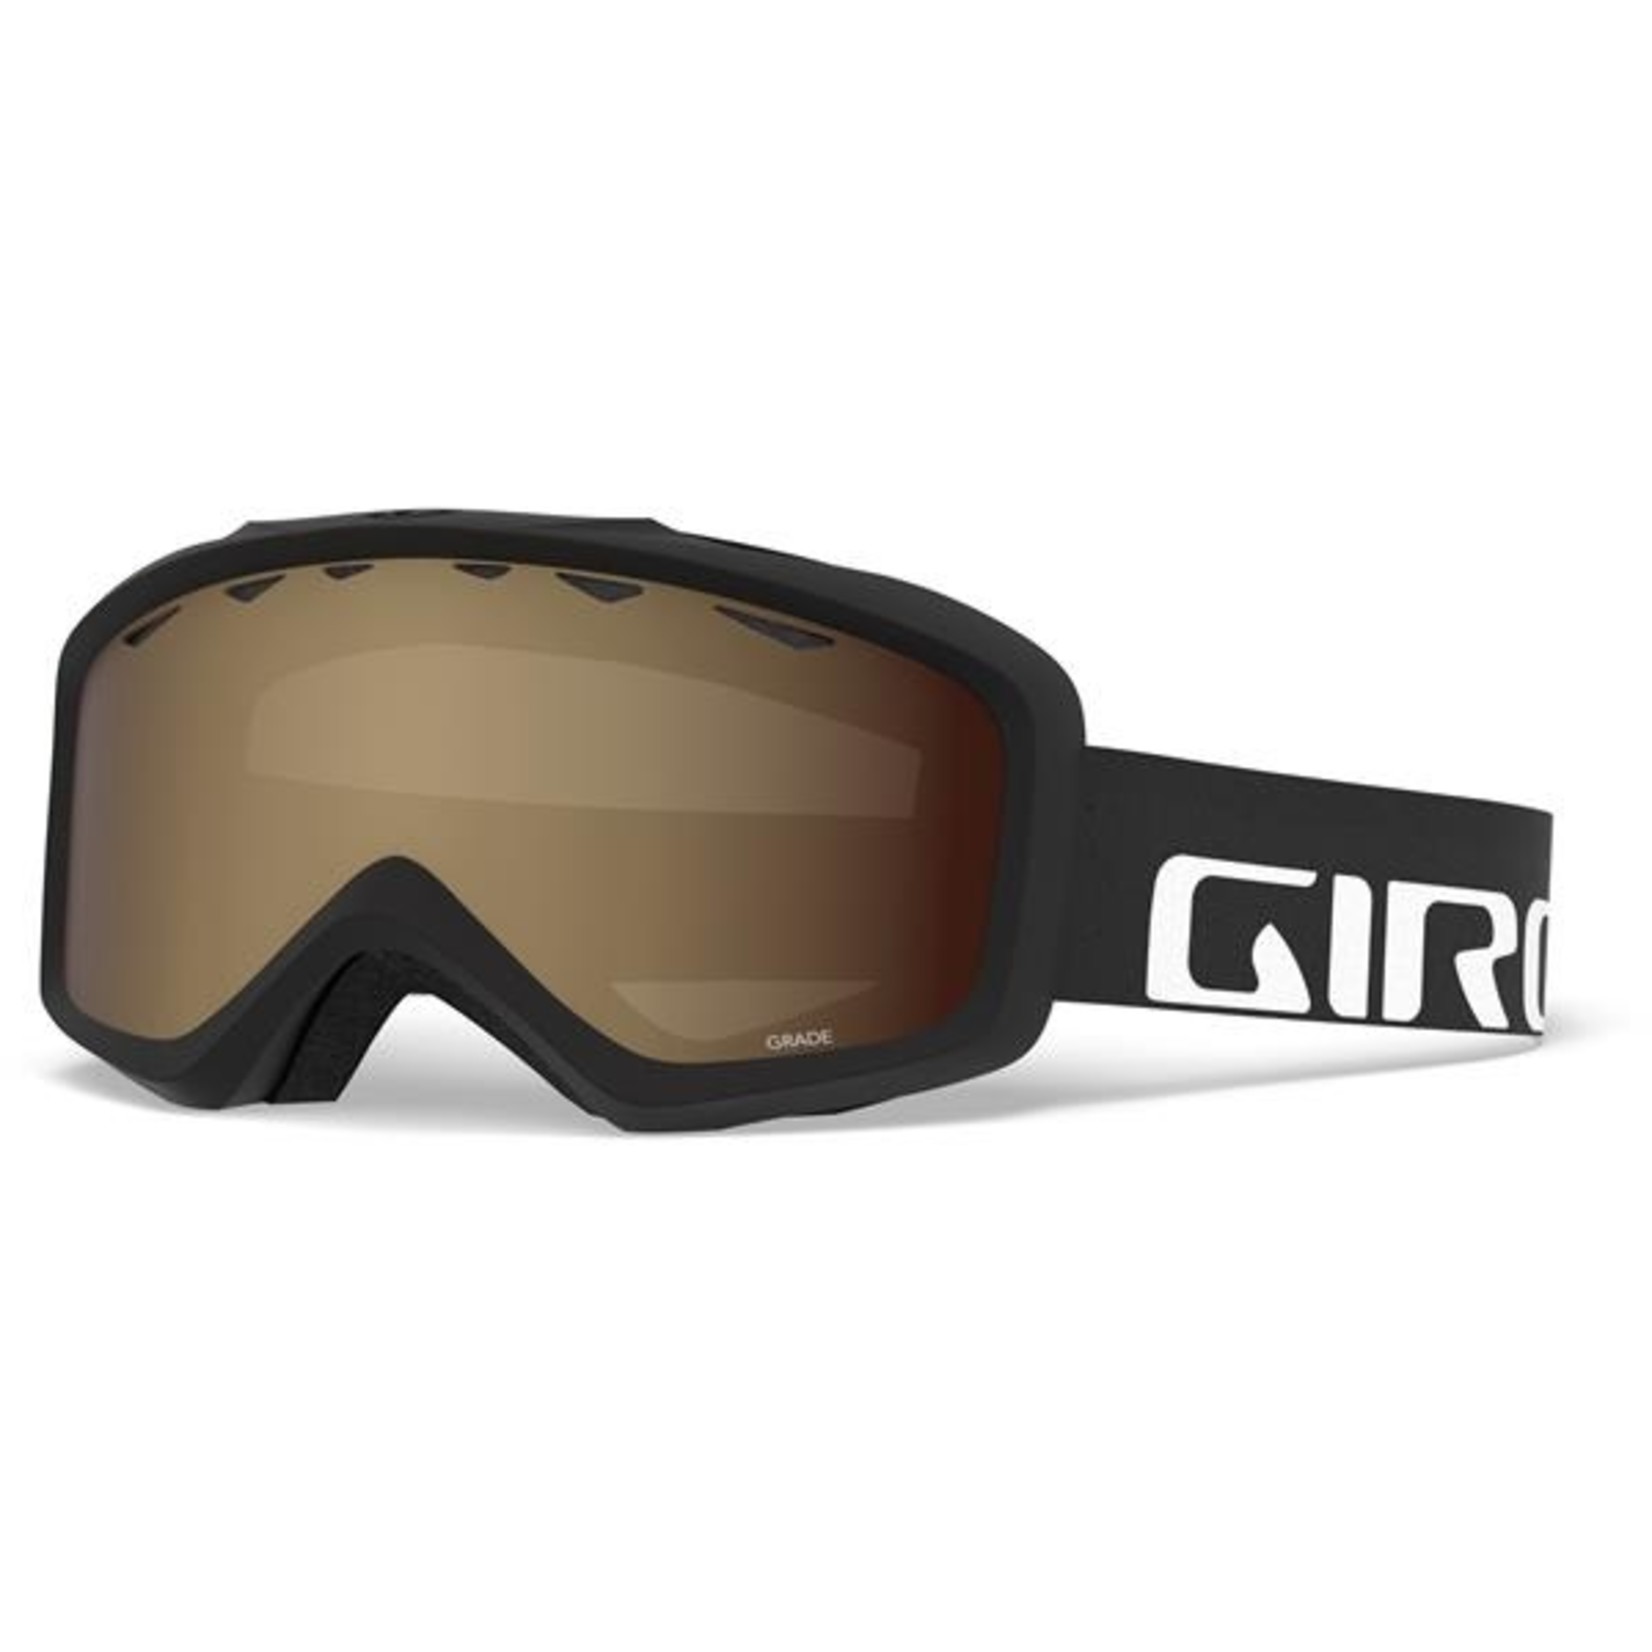 Giro Snow Goggles, Grade (Youth Large)